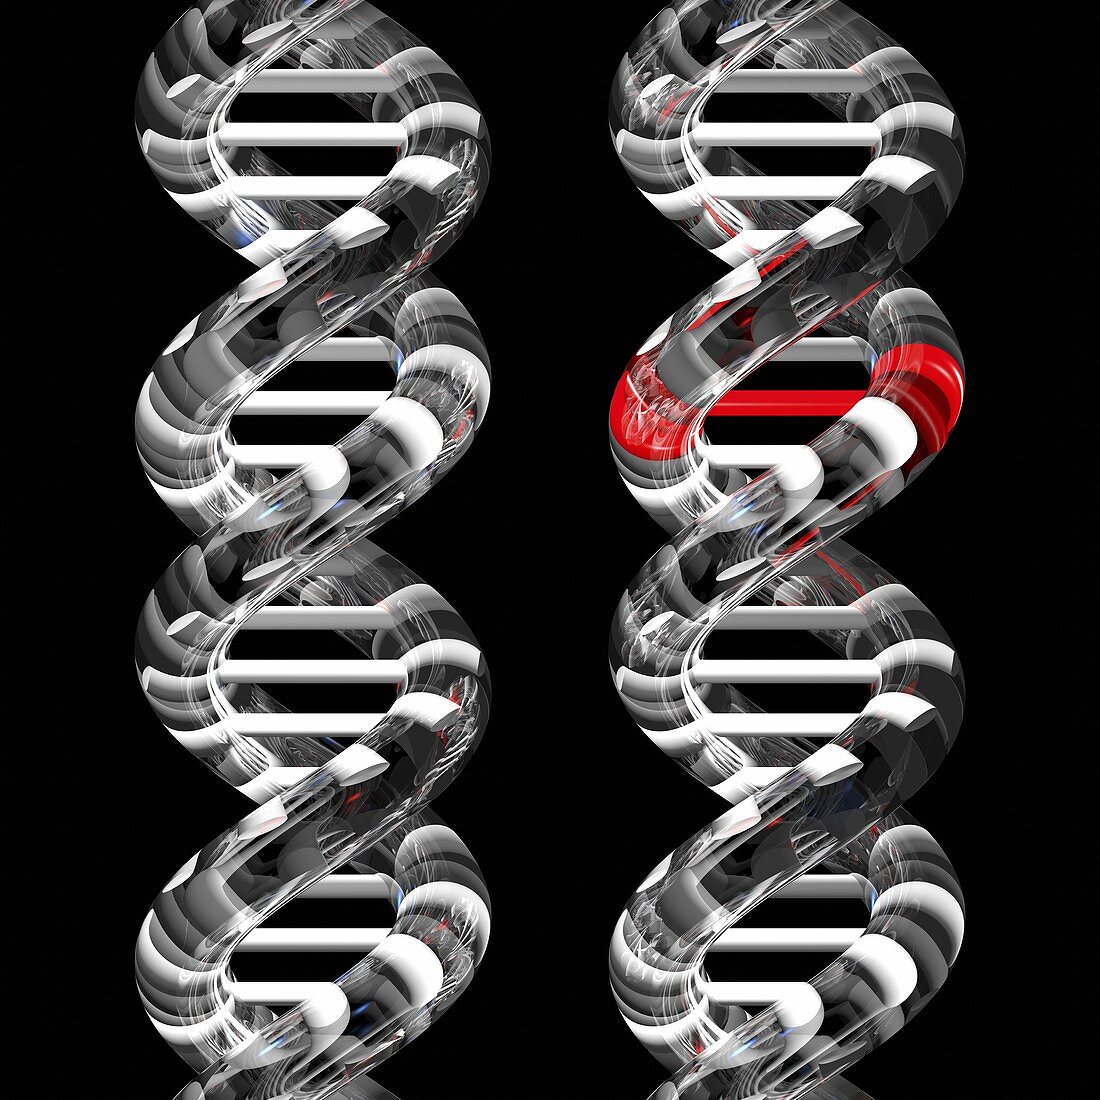 DNA mutation,conceptual image